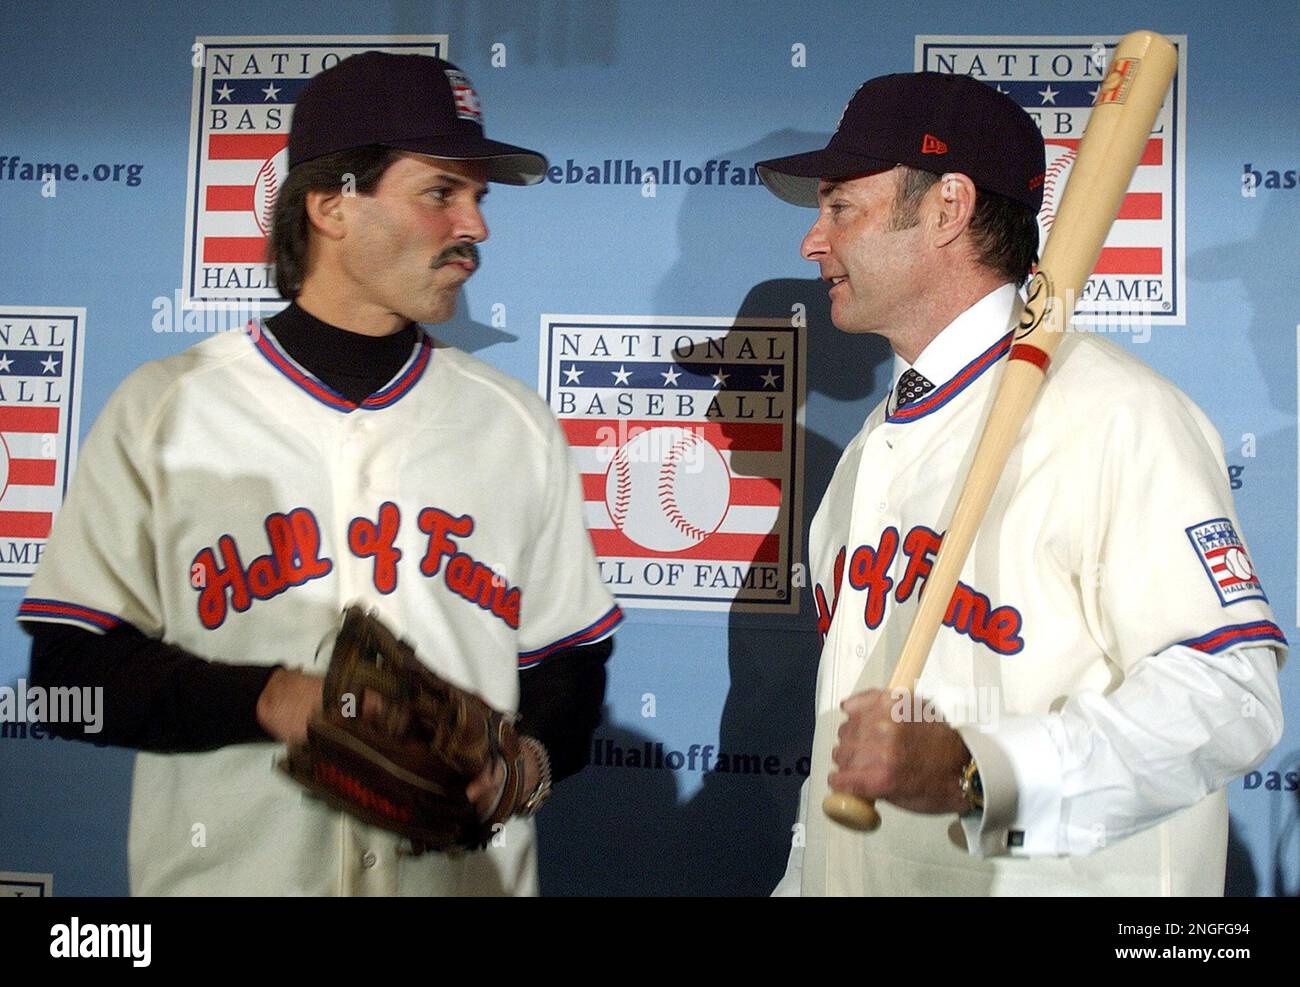 Dennis Eckersley, left, and Paul Molitor, the National Baseball